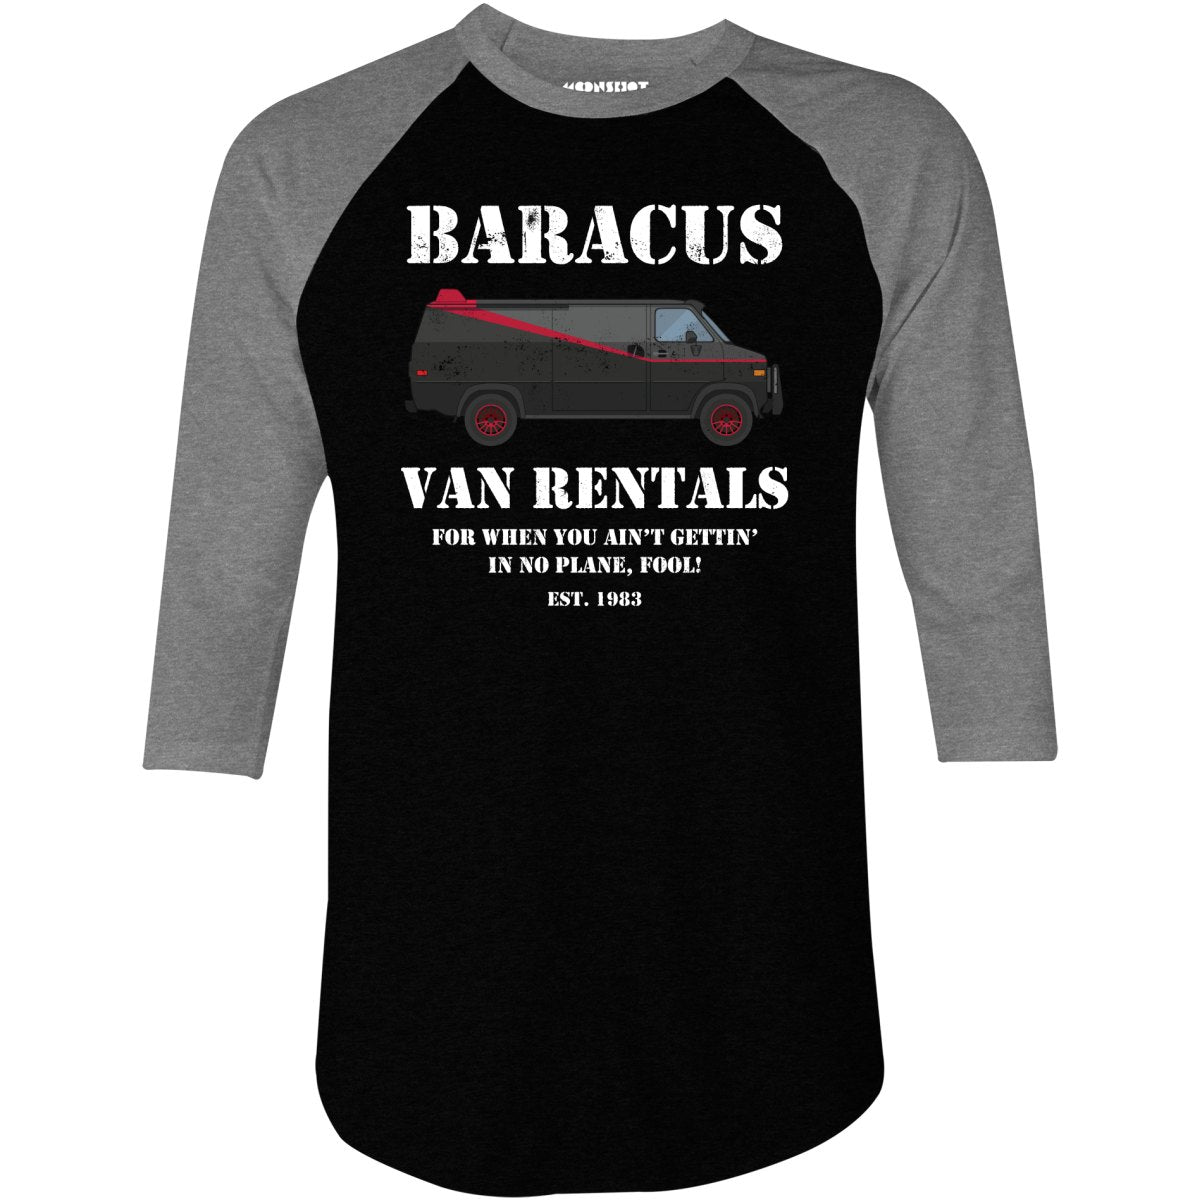 Baracus Van Rentals - 3/4 Sleeve Raglan T-Shirt